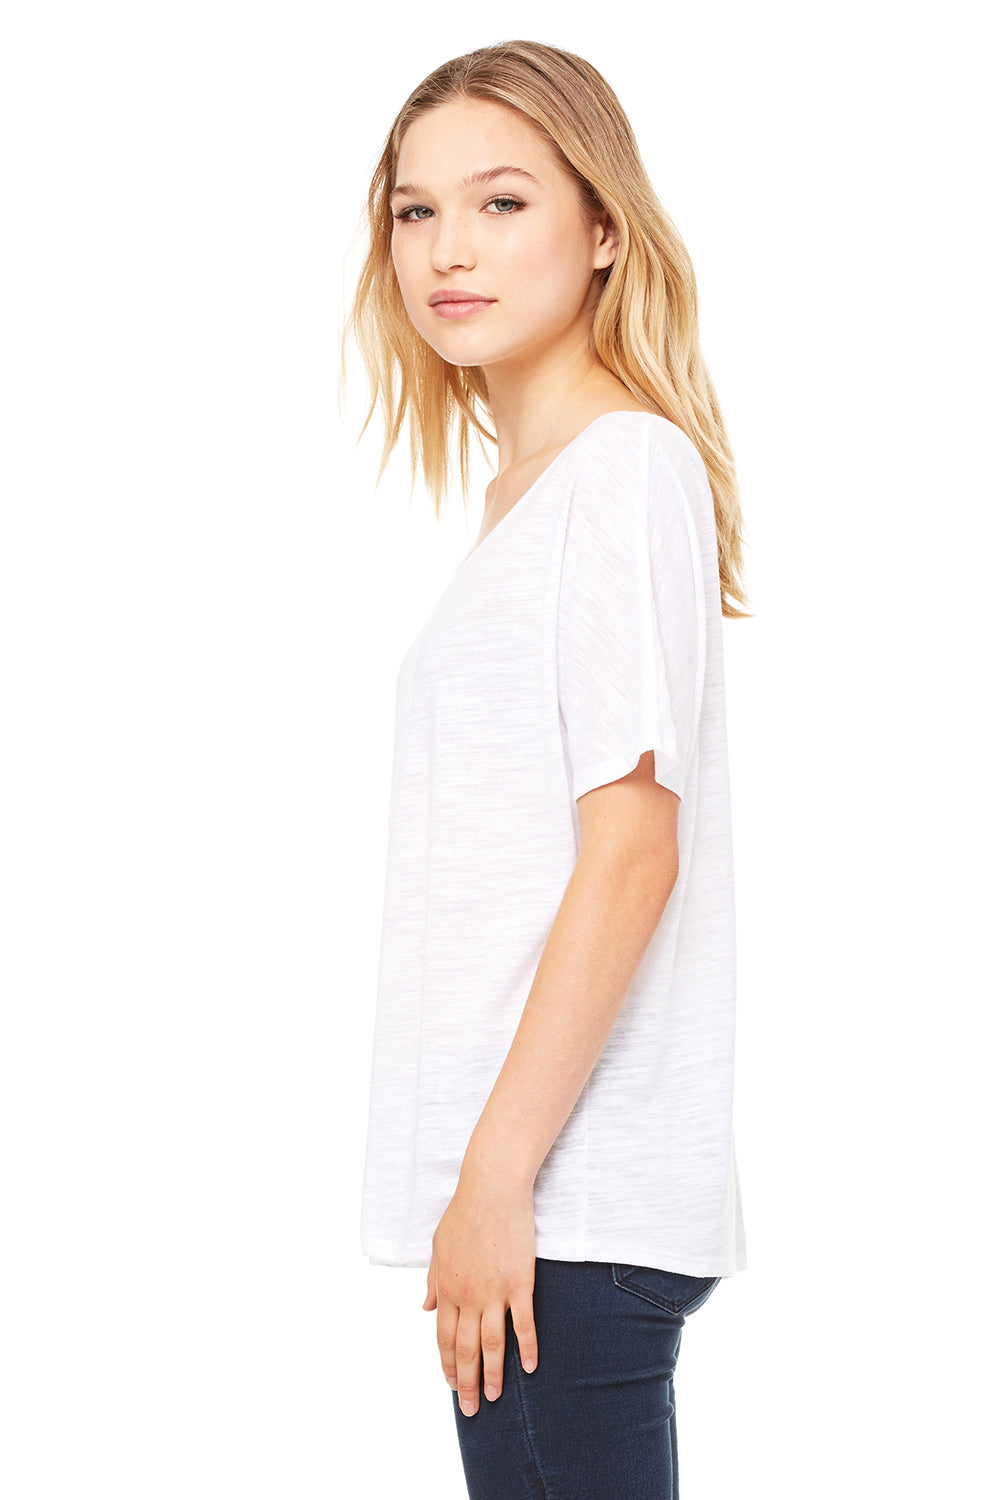 Bella + Canvas 8816 Womens Slouchy Short Sleeve Wide Neck T-Shirt White Slub Side